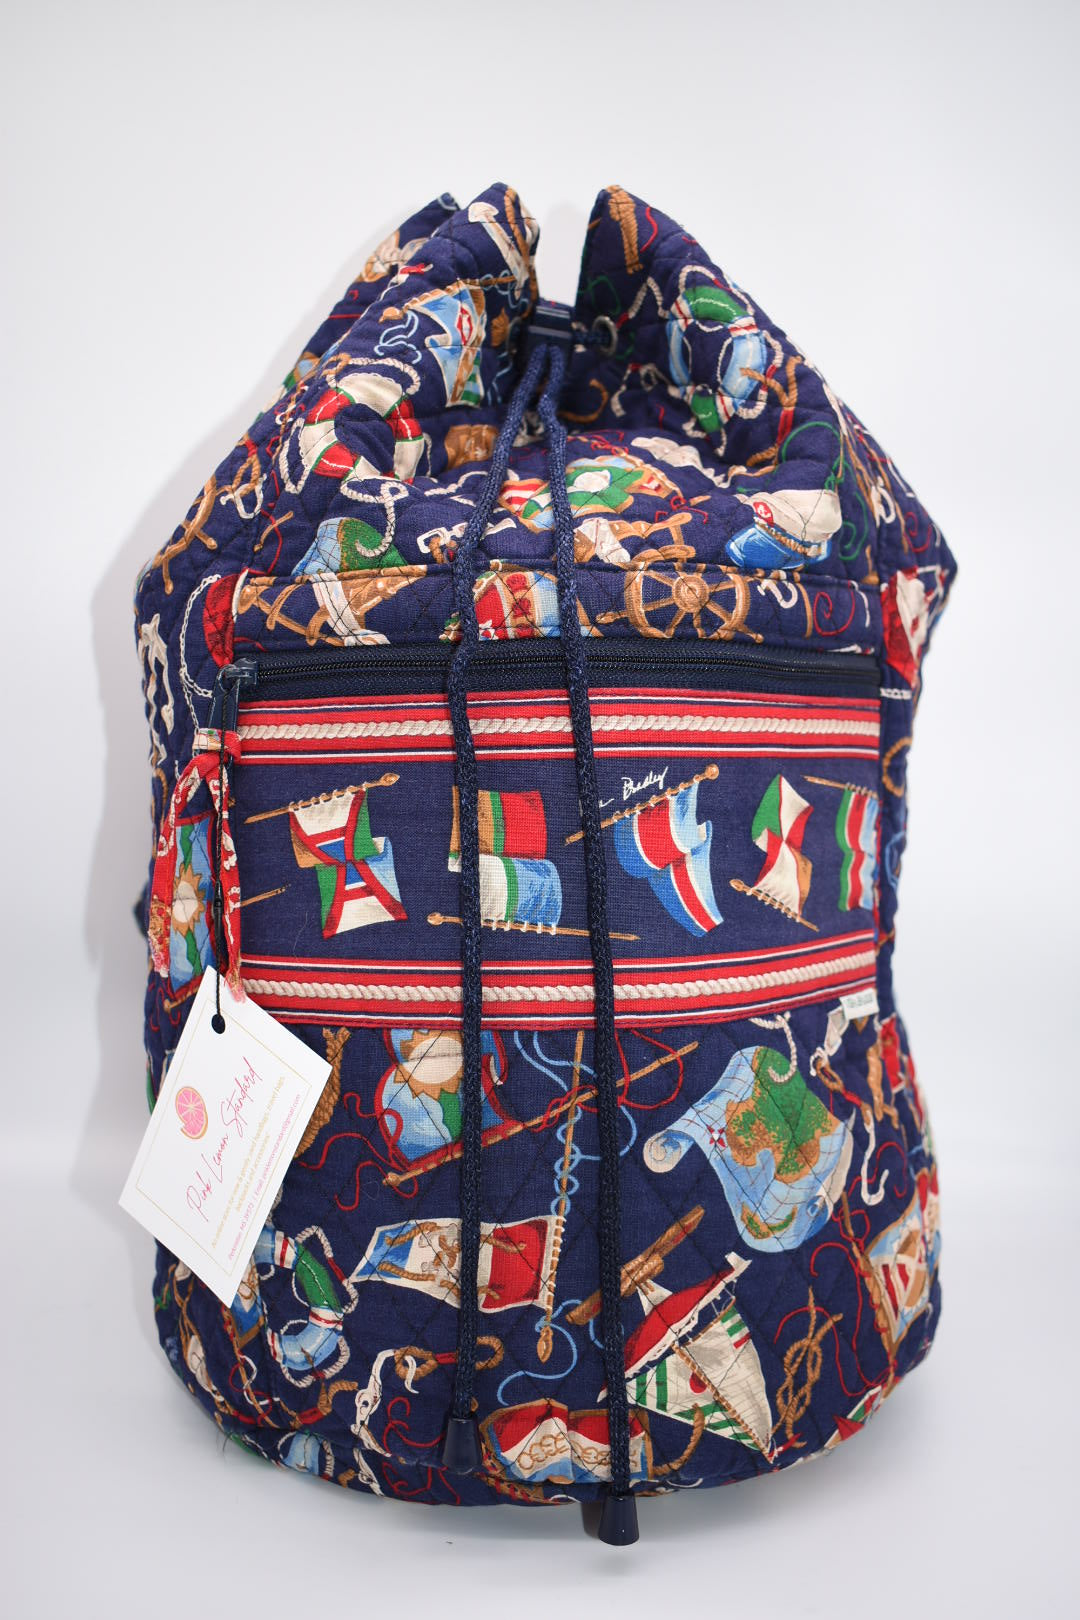 Vintage Vera Bradley Large Sling Bag in "Regatta 1994" Pattern